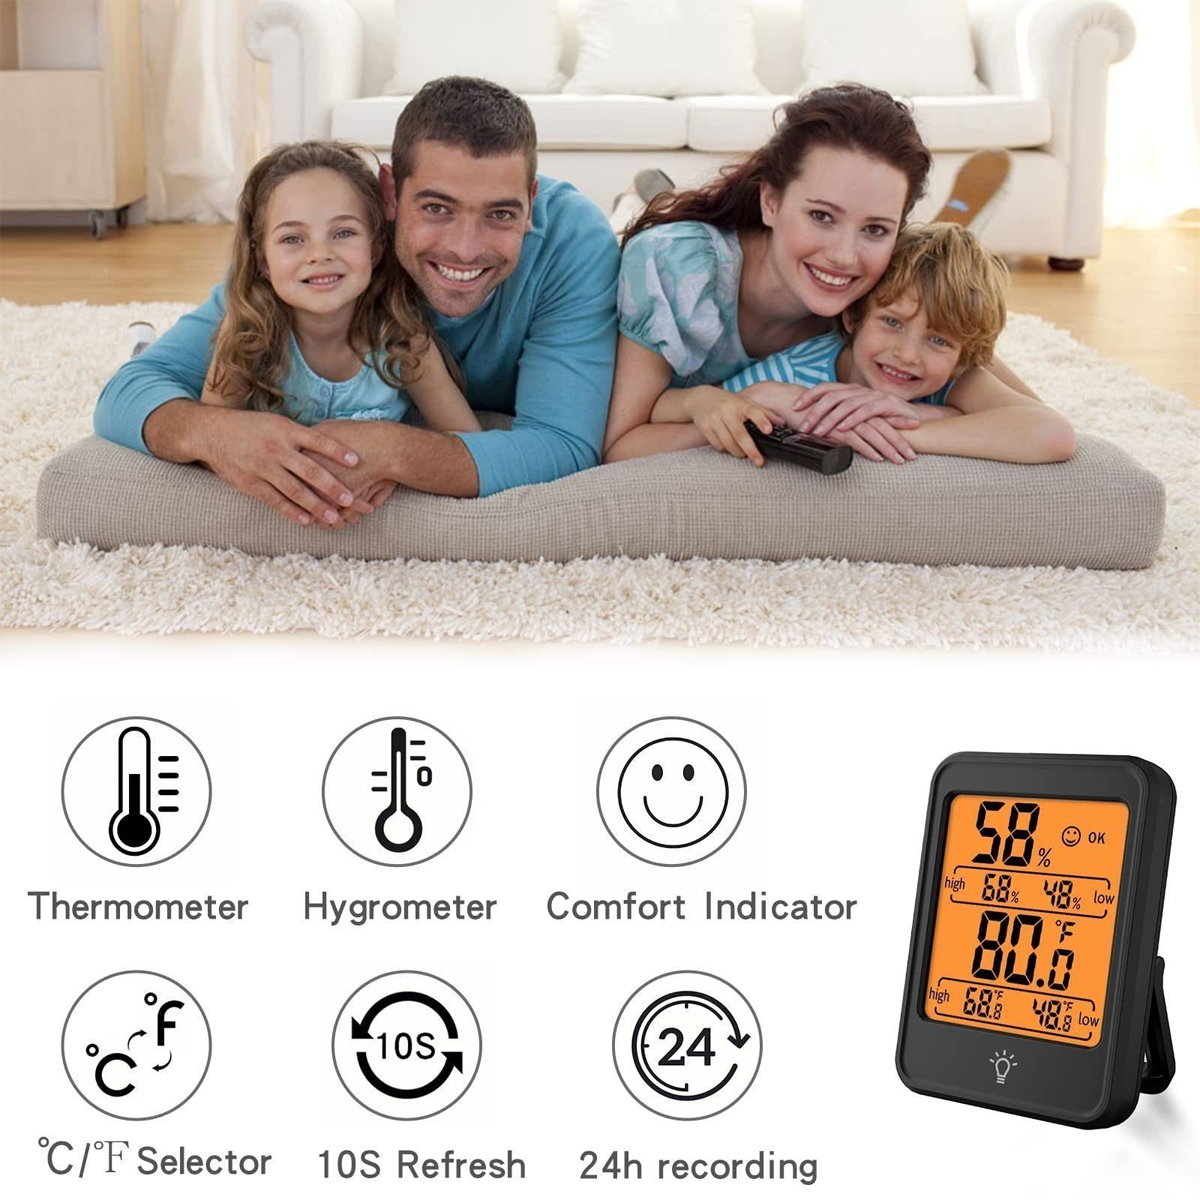 BABY JA Raumthermometer Digitales Thermometer,Hygrometer Hygrothermometer mit Hintergrundbeleuchtung Innen,Display